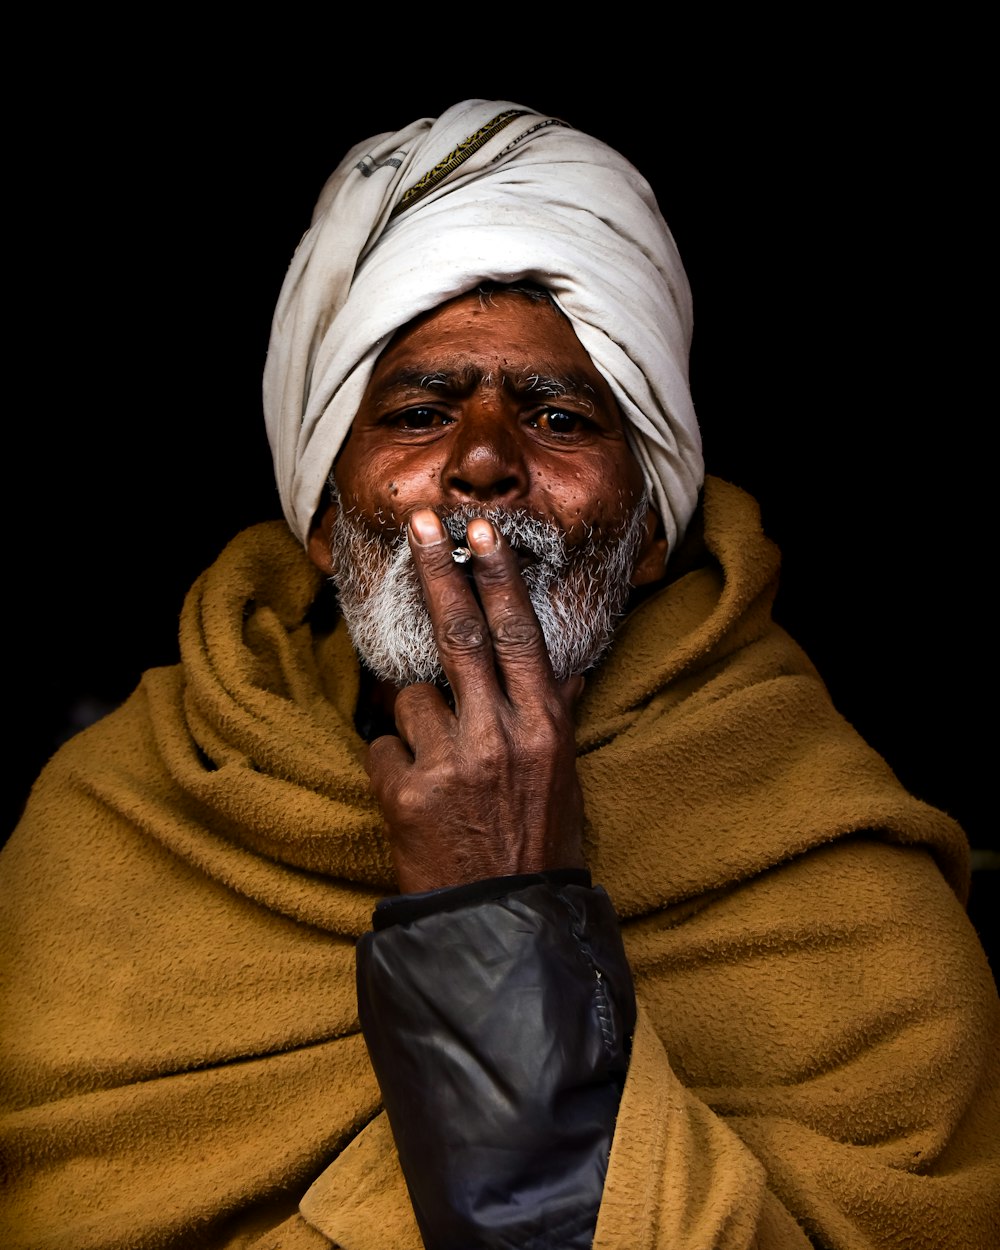 a man with a white turban smoking a cigarette